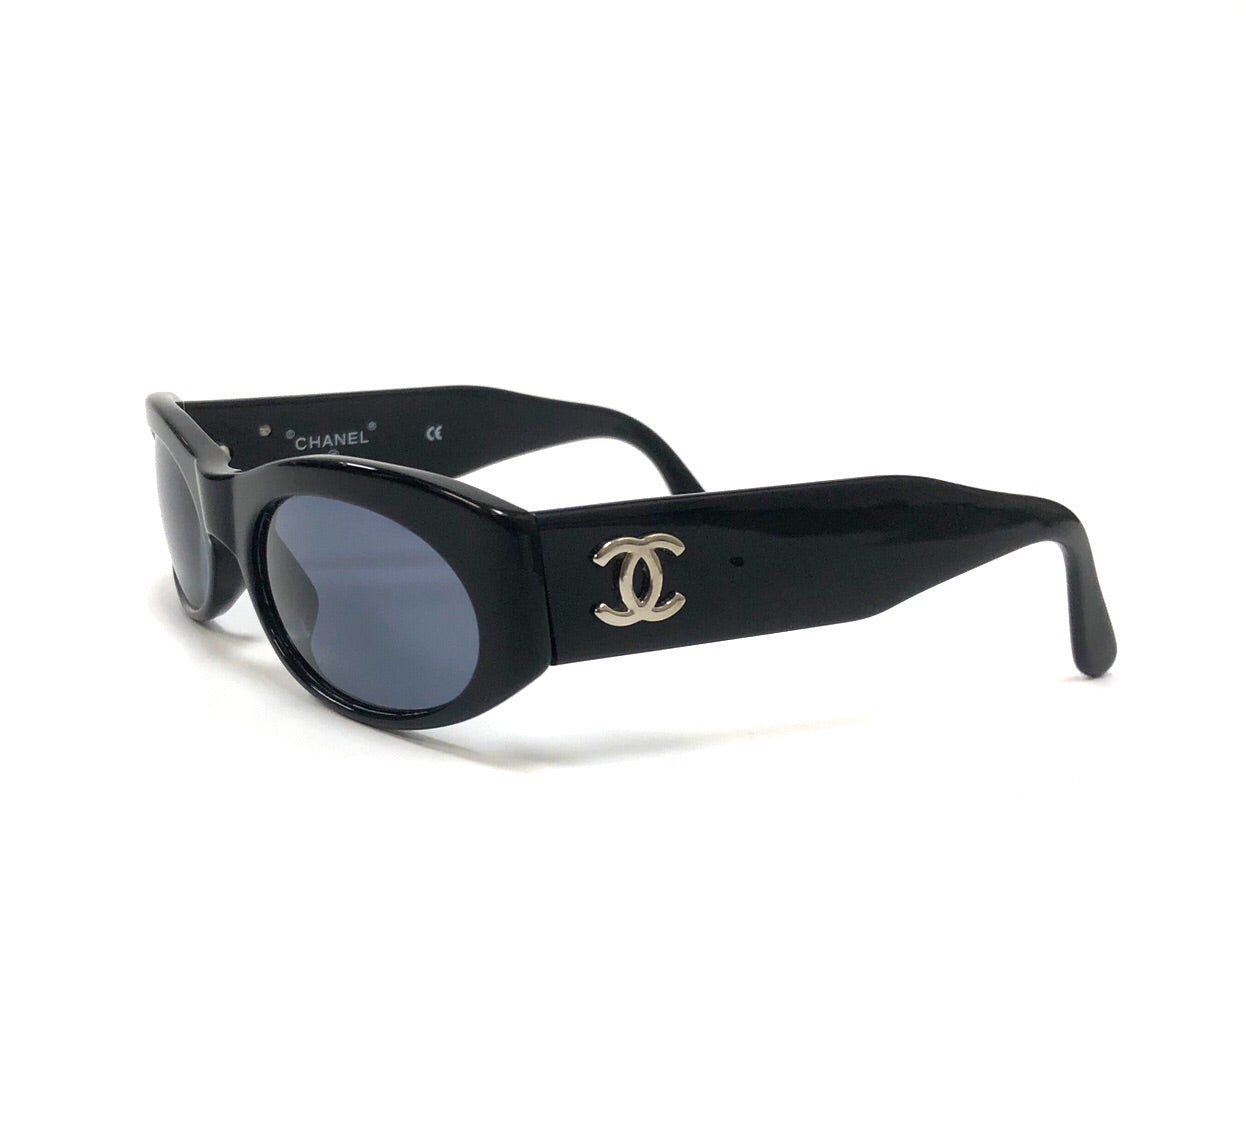 Chanel White Metal CC Logo Sunglasses 6023 - Yoogi's Closet